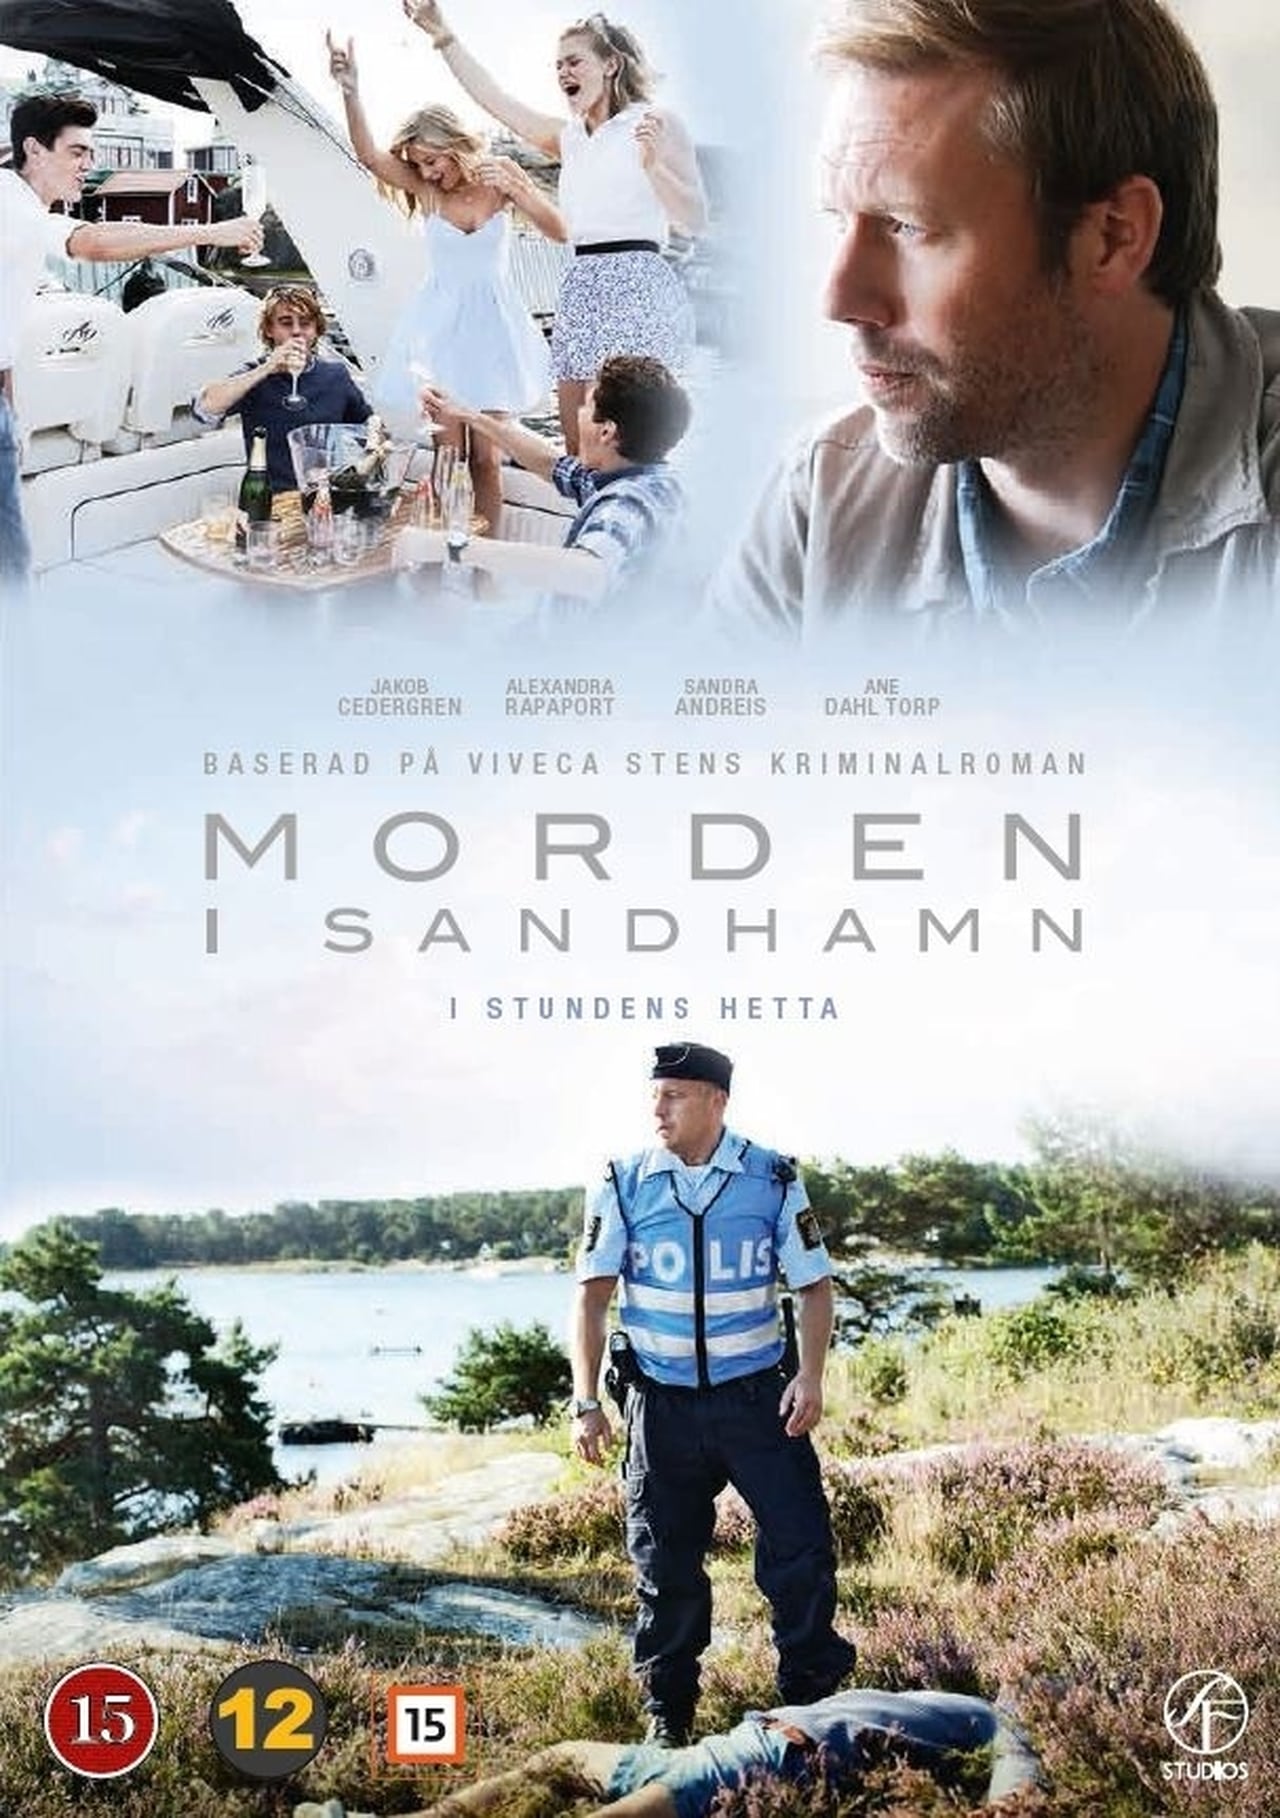 The Sandhamn Murders (2015)